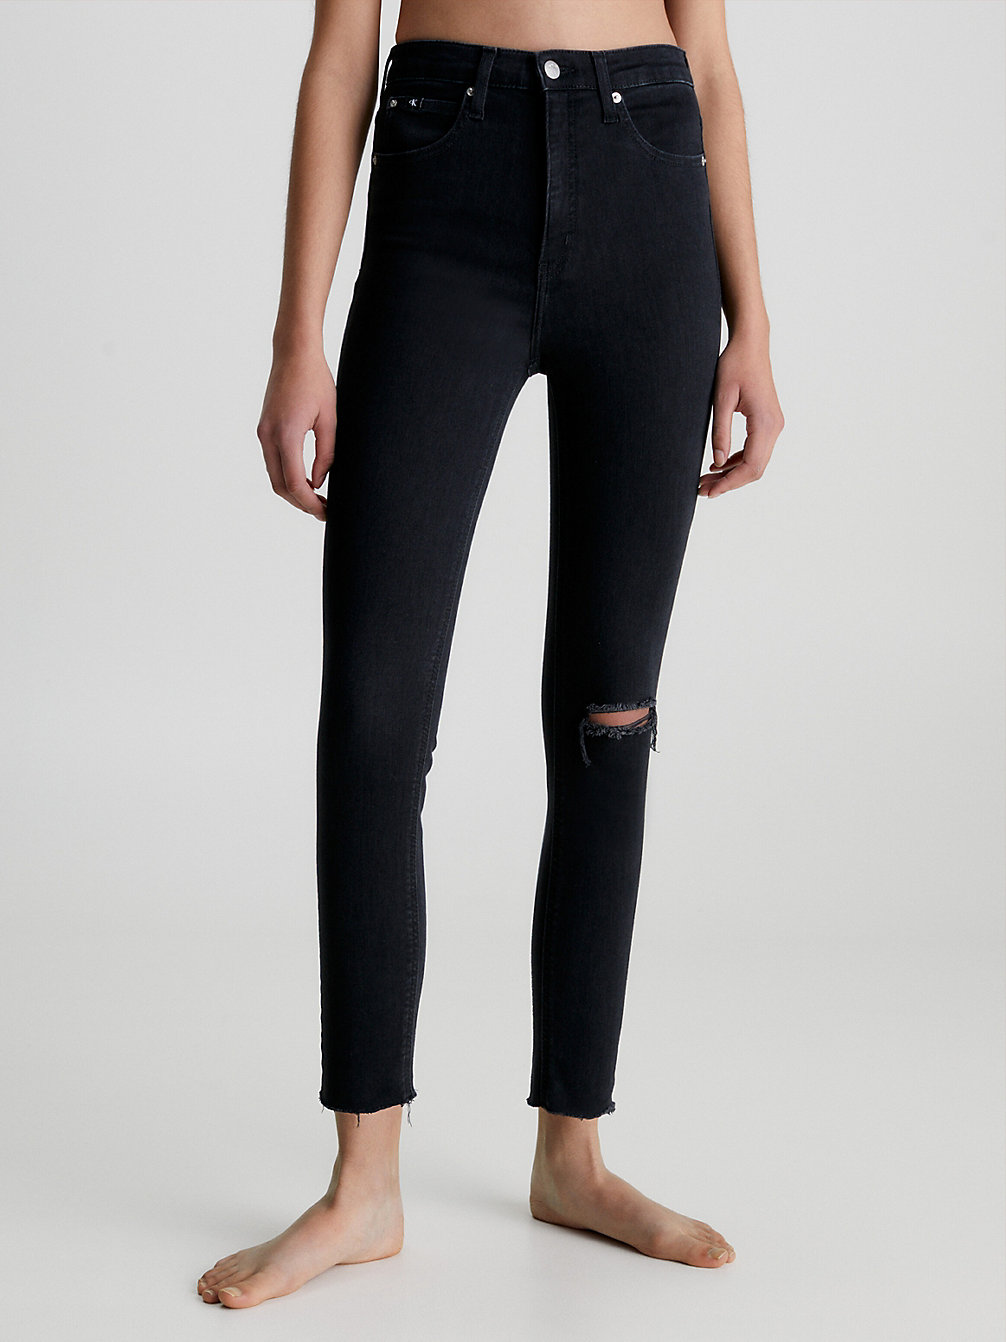 High Rise Super Skinny Jeans Alla Caviglia > DENIM BLACK > undefined donna > Calvin Klein